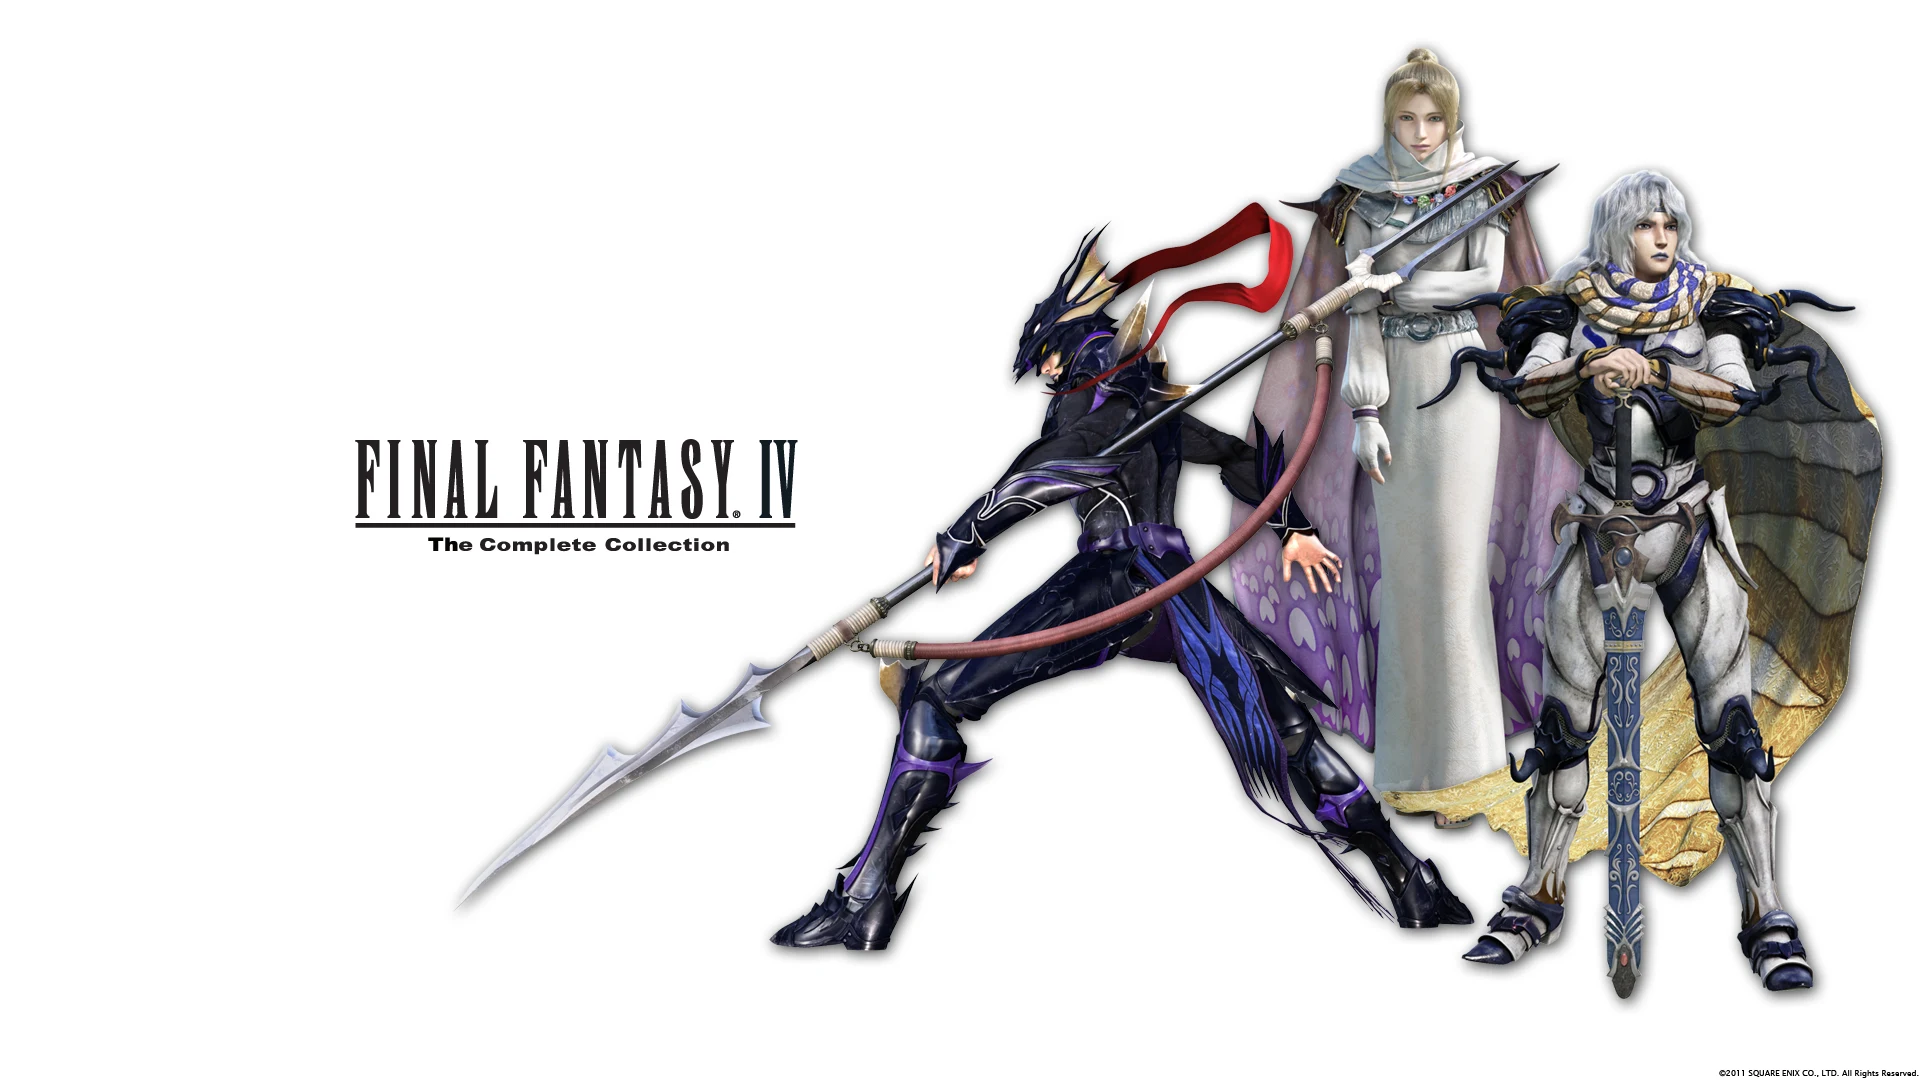 Cool Final Fantasy Image